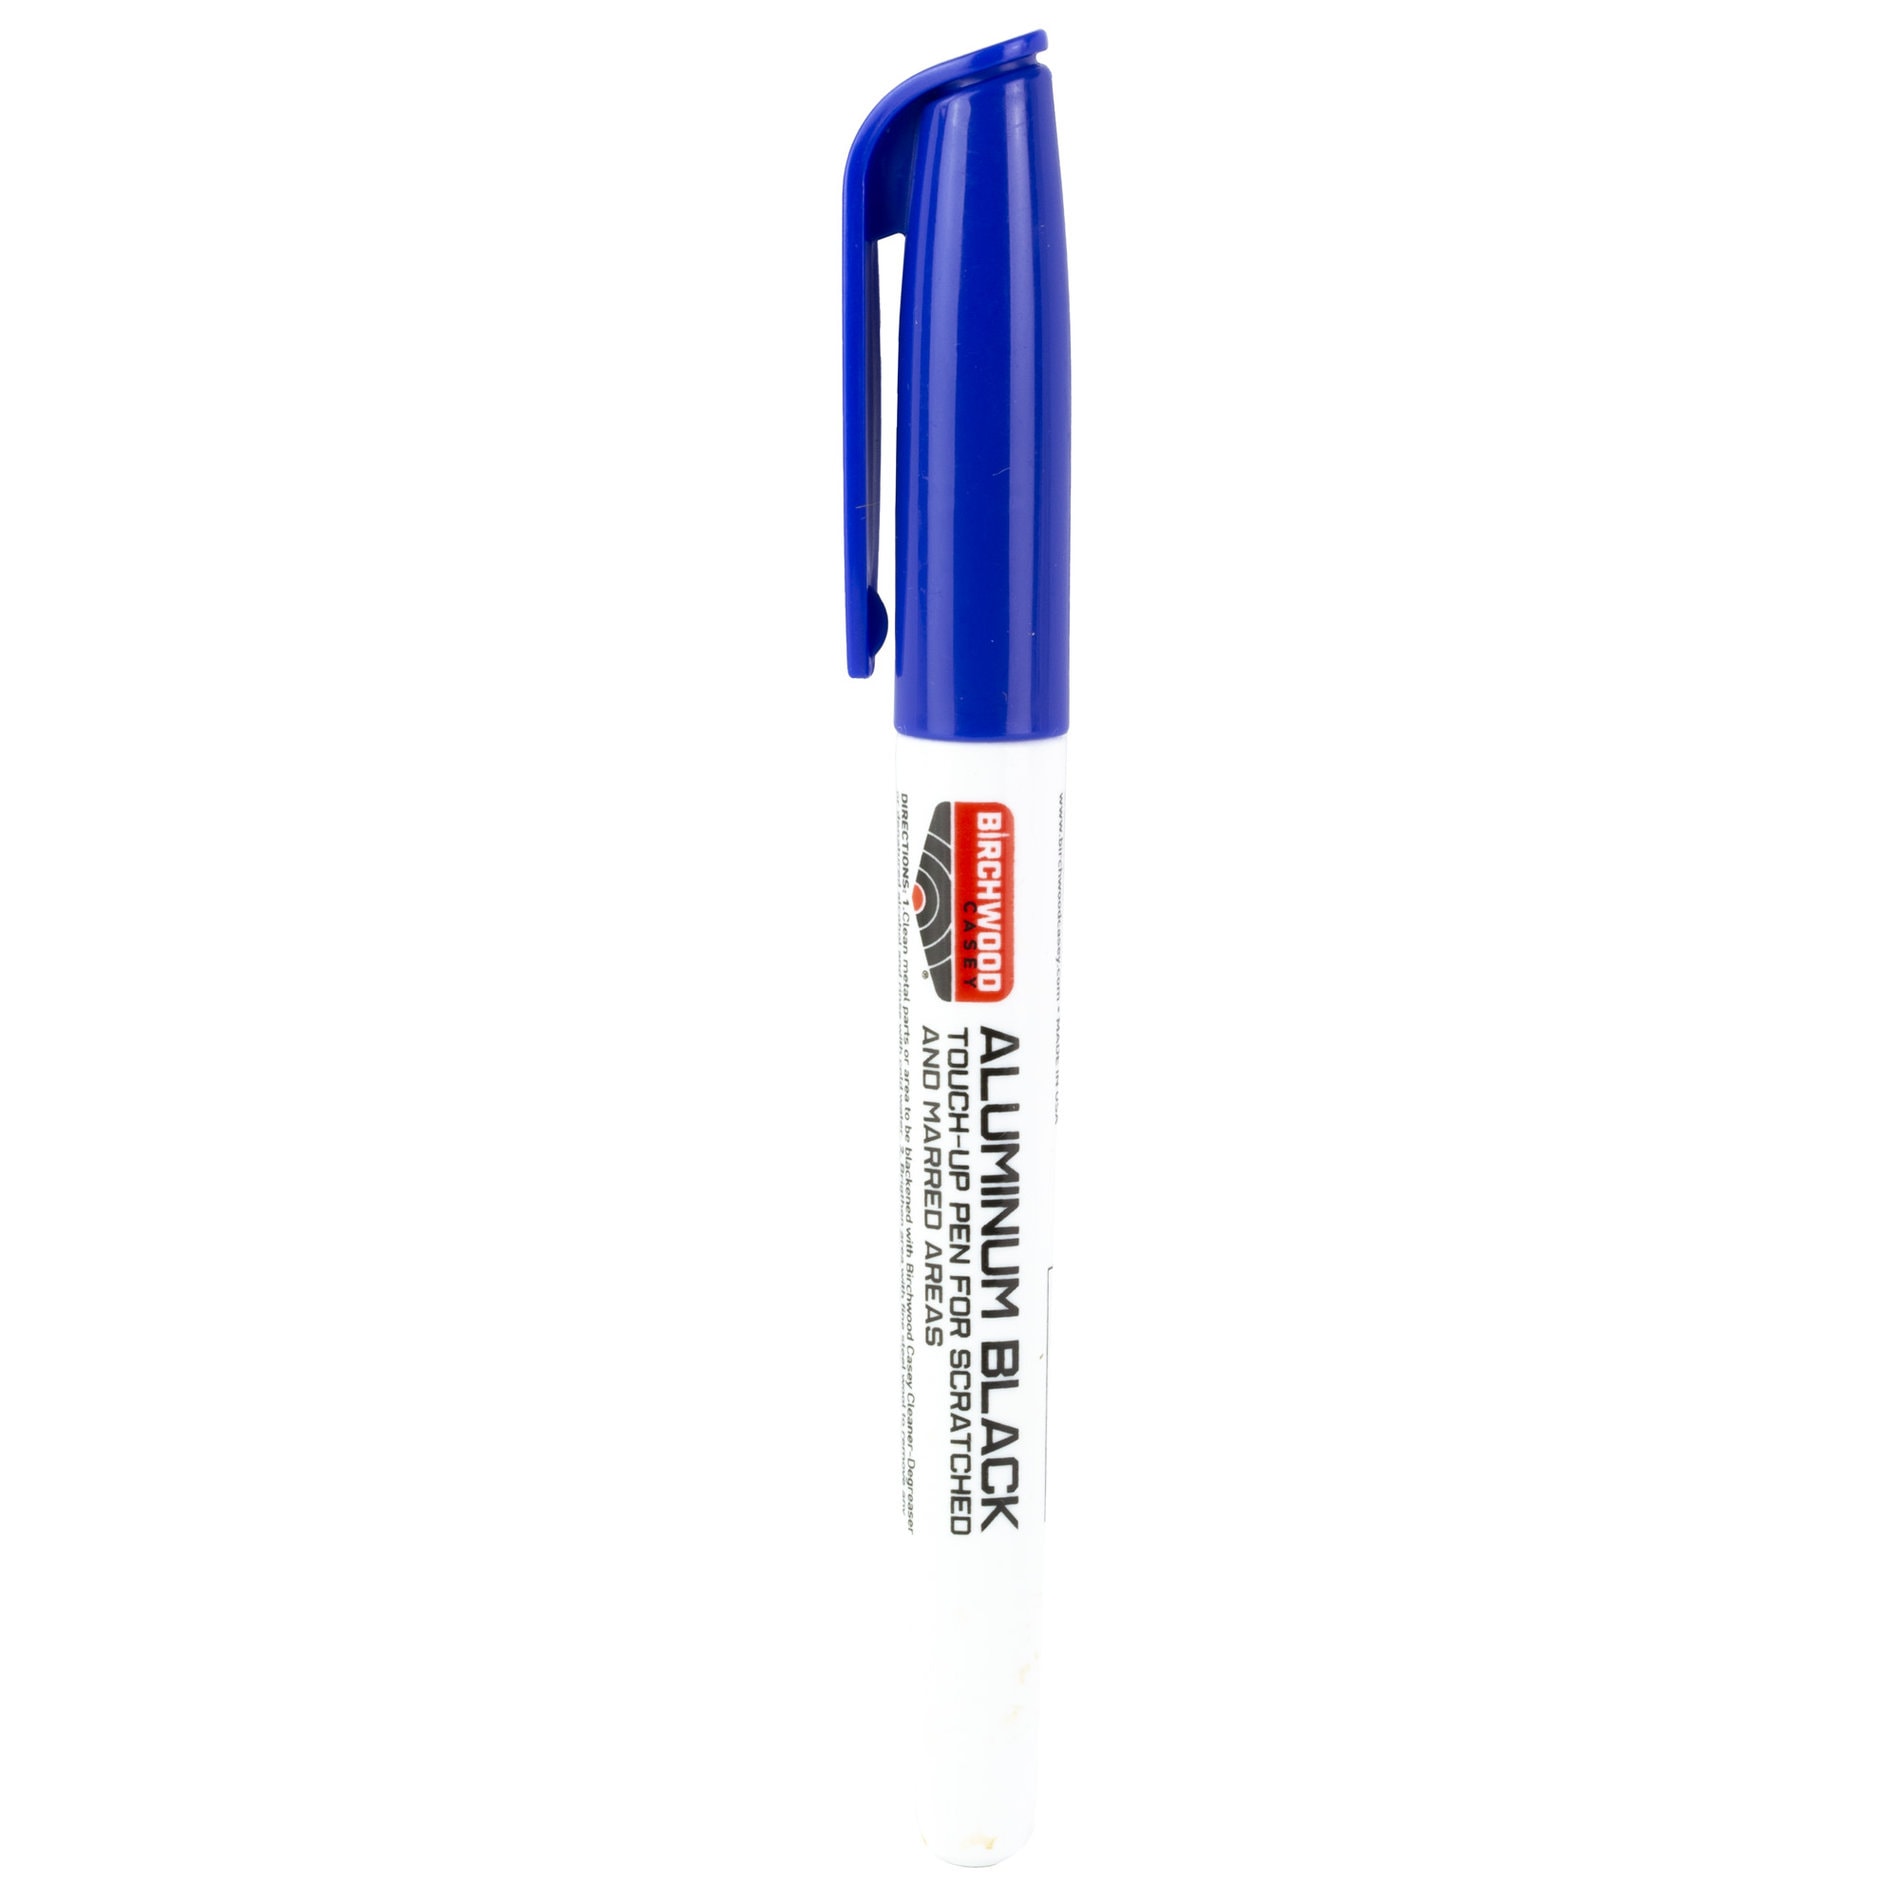 Birchwood Casey Presto Mag Gun Blue, Flat Black Paint Pen and Free Swabs